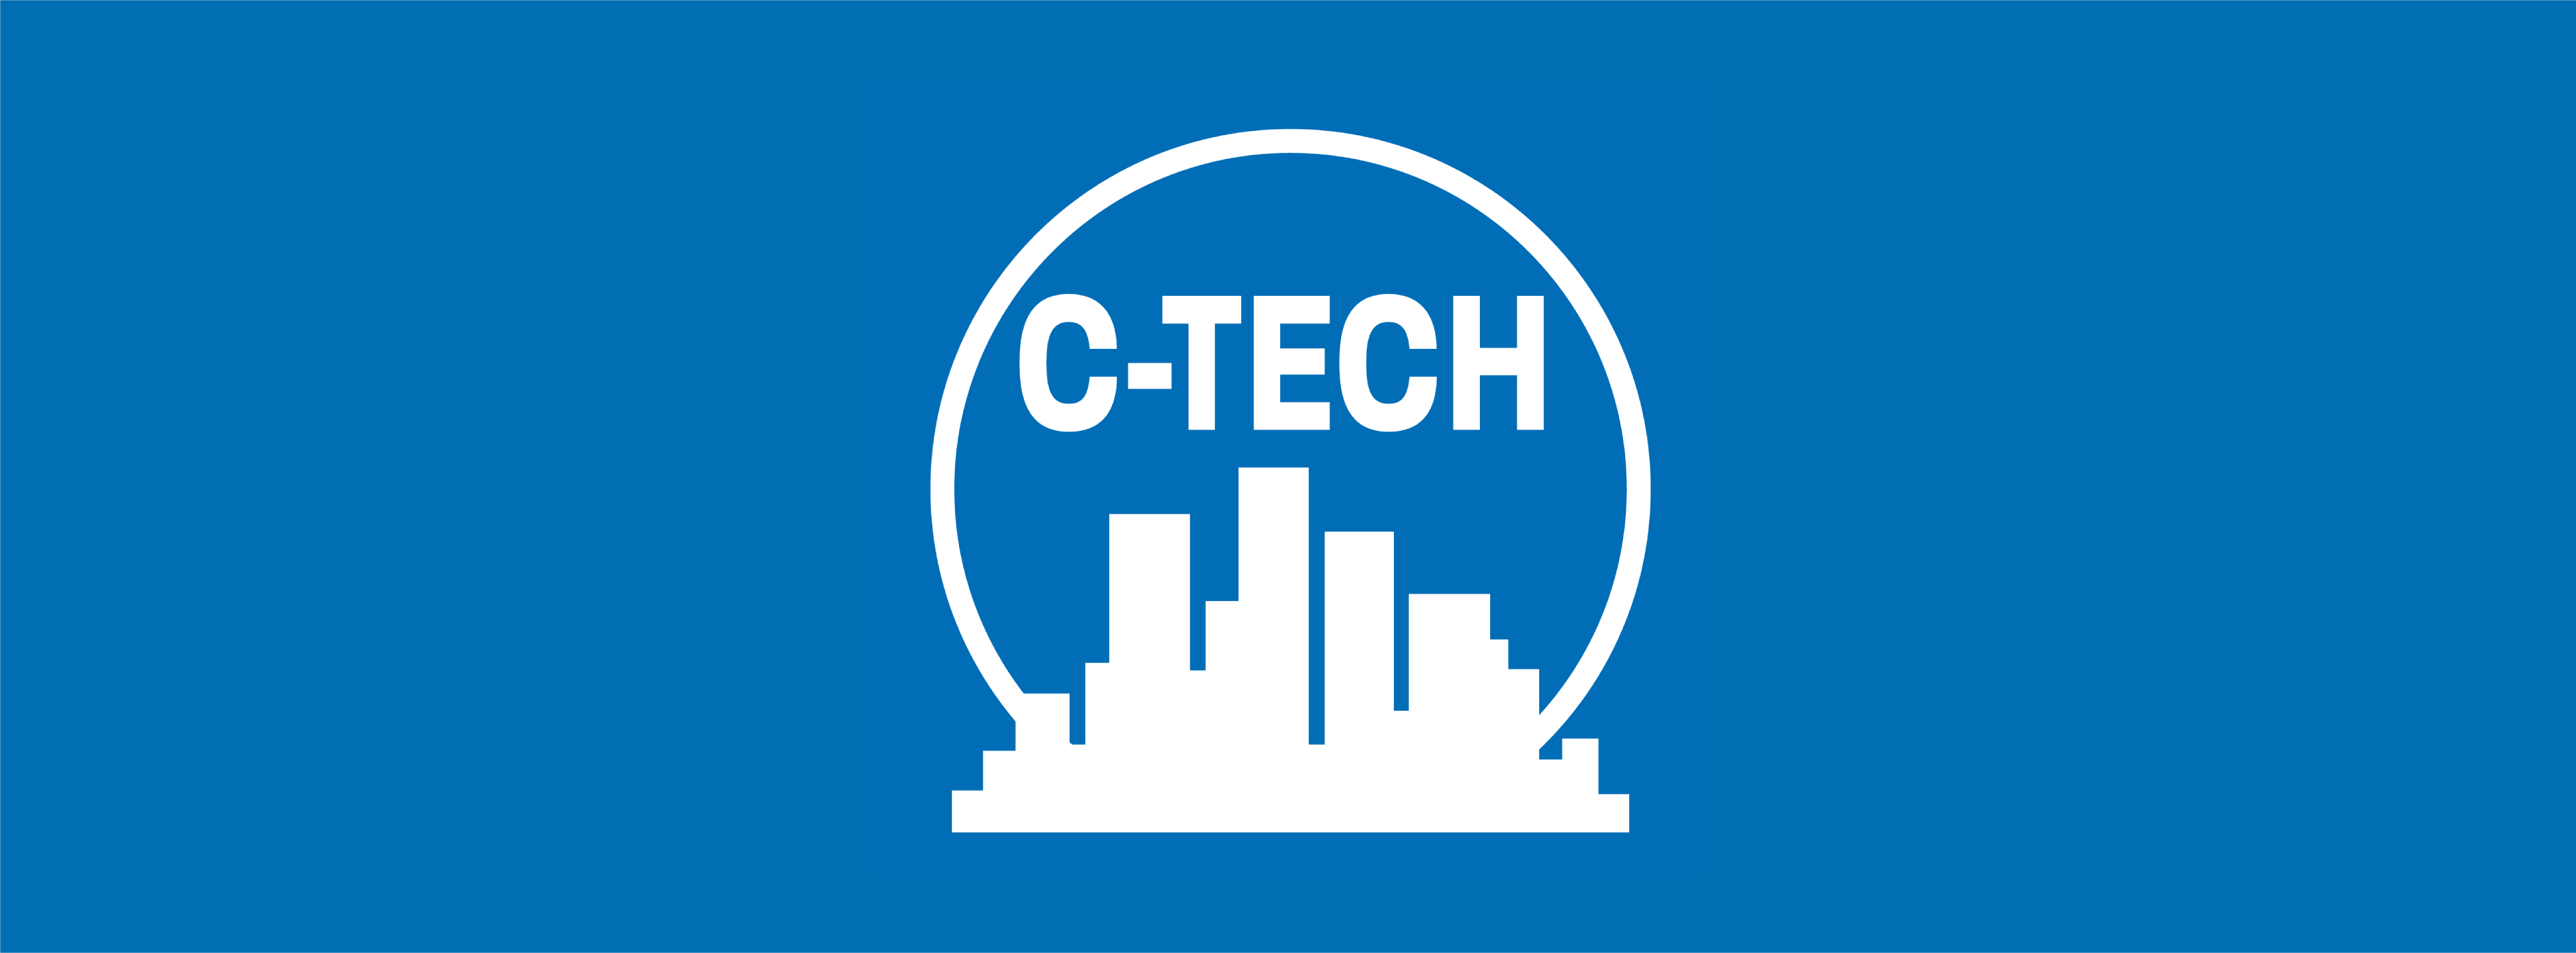 C-TECH Certifications Image